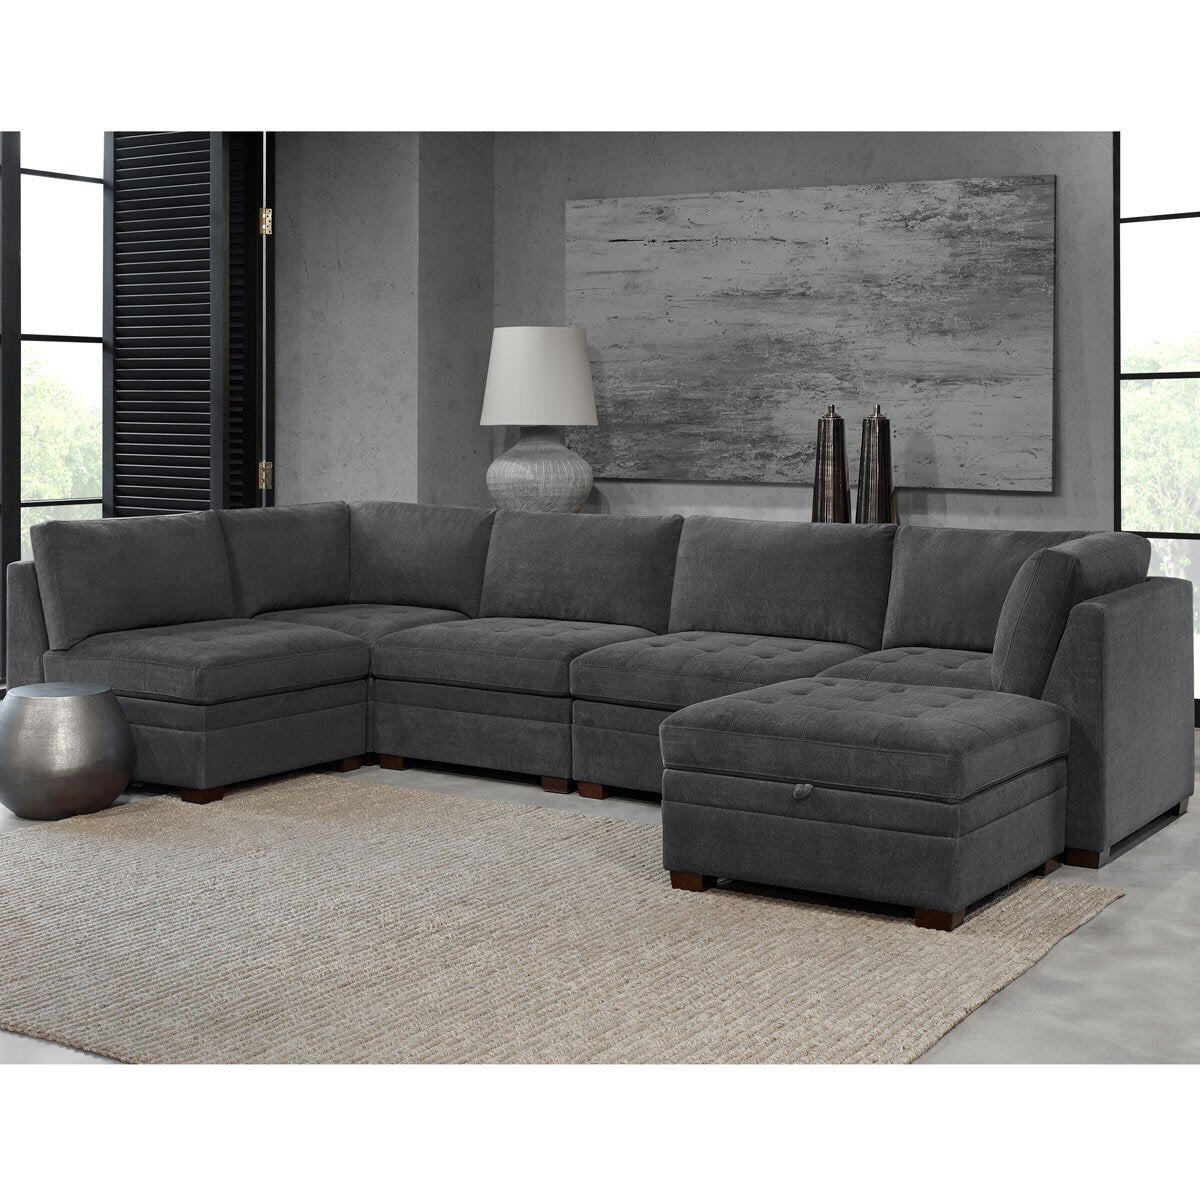 Thomasville Tisdale Dark Grey 6 Piece Modular Fabric Sofa - Signature Retail Stores